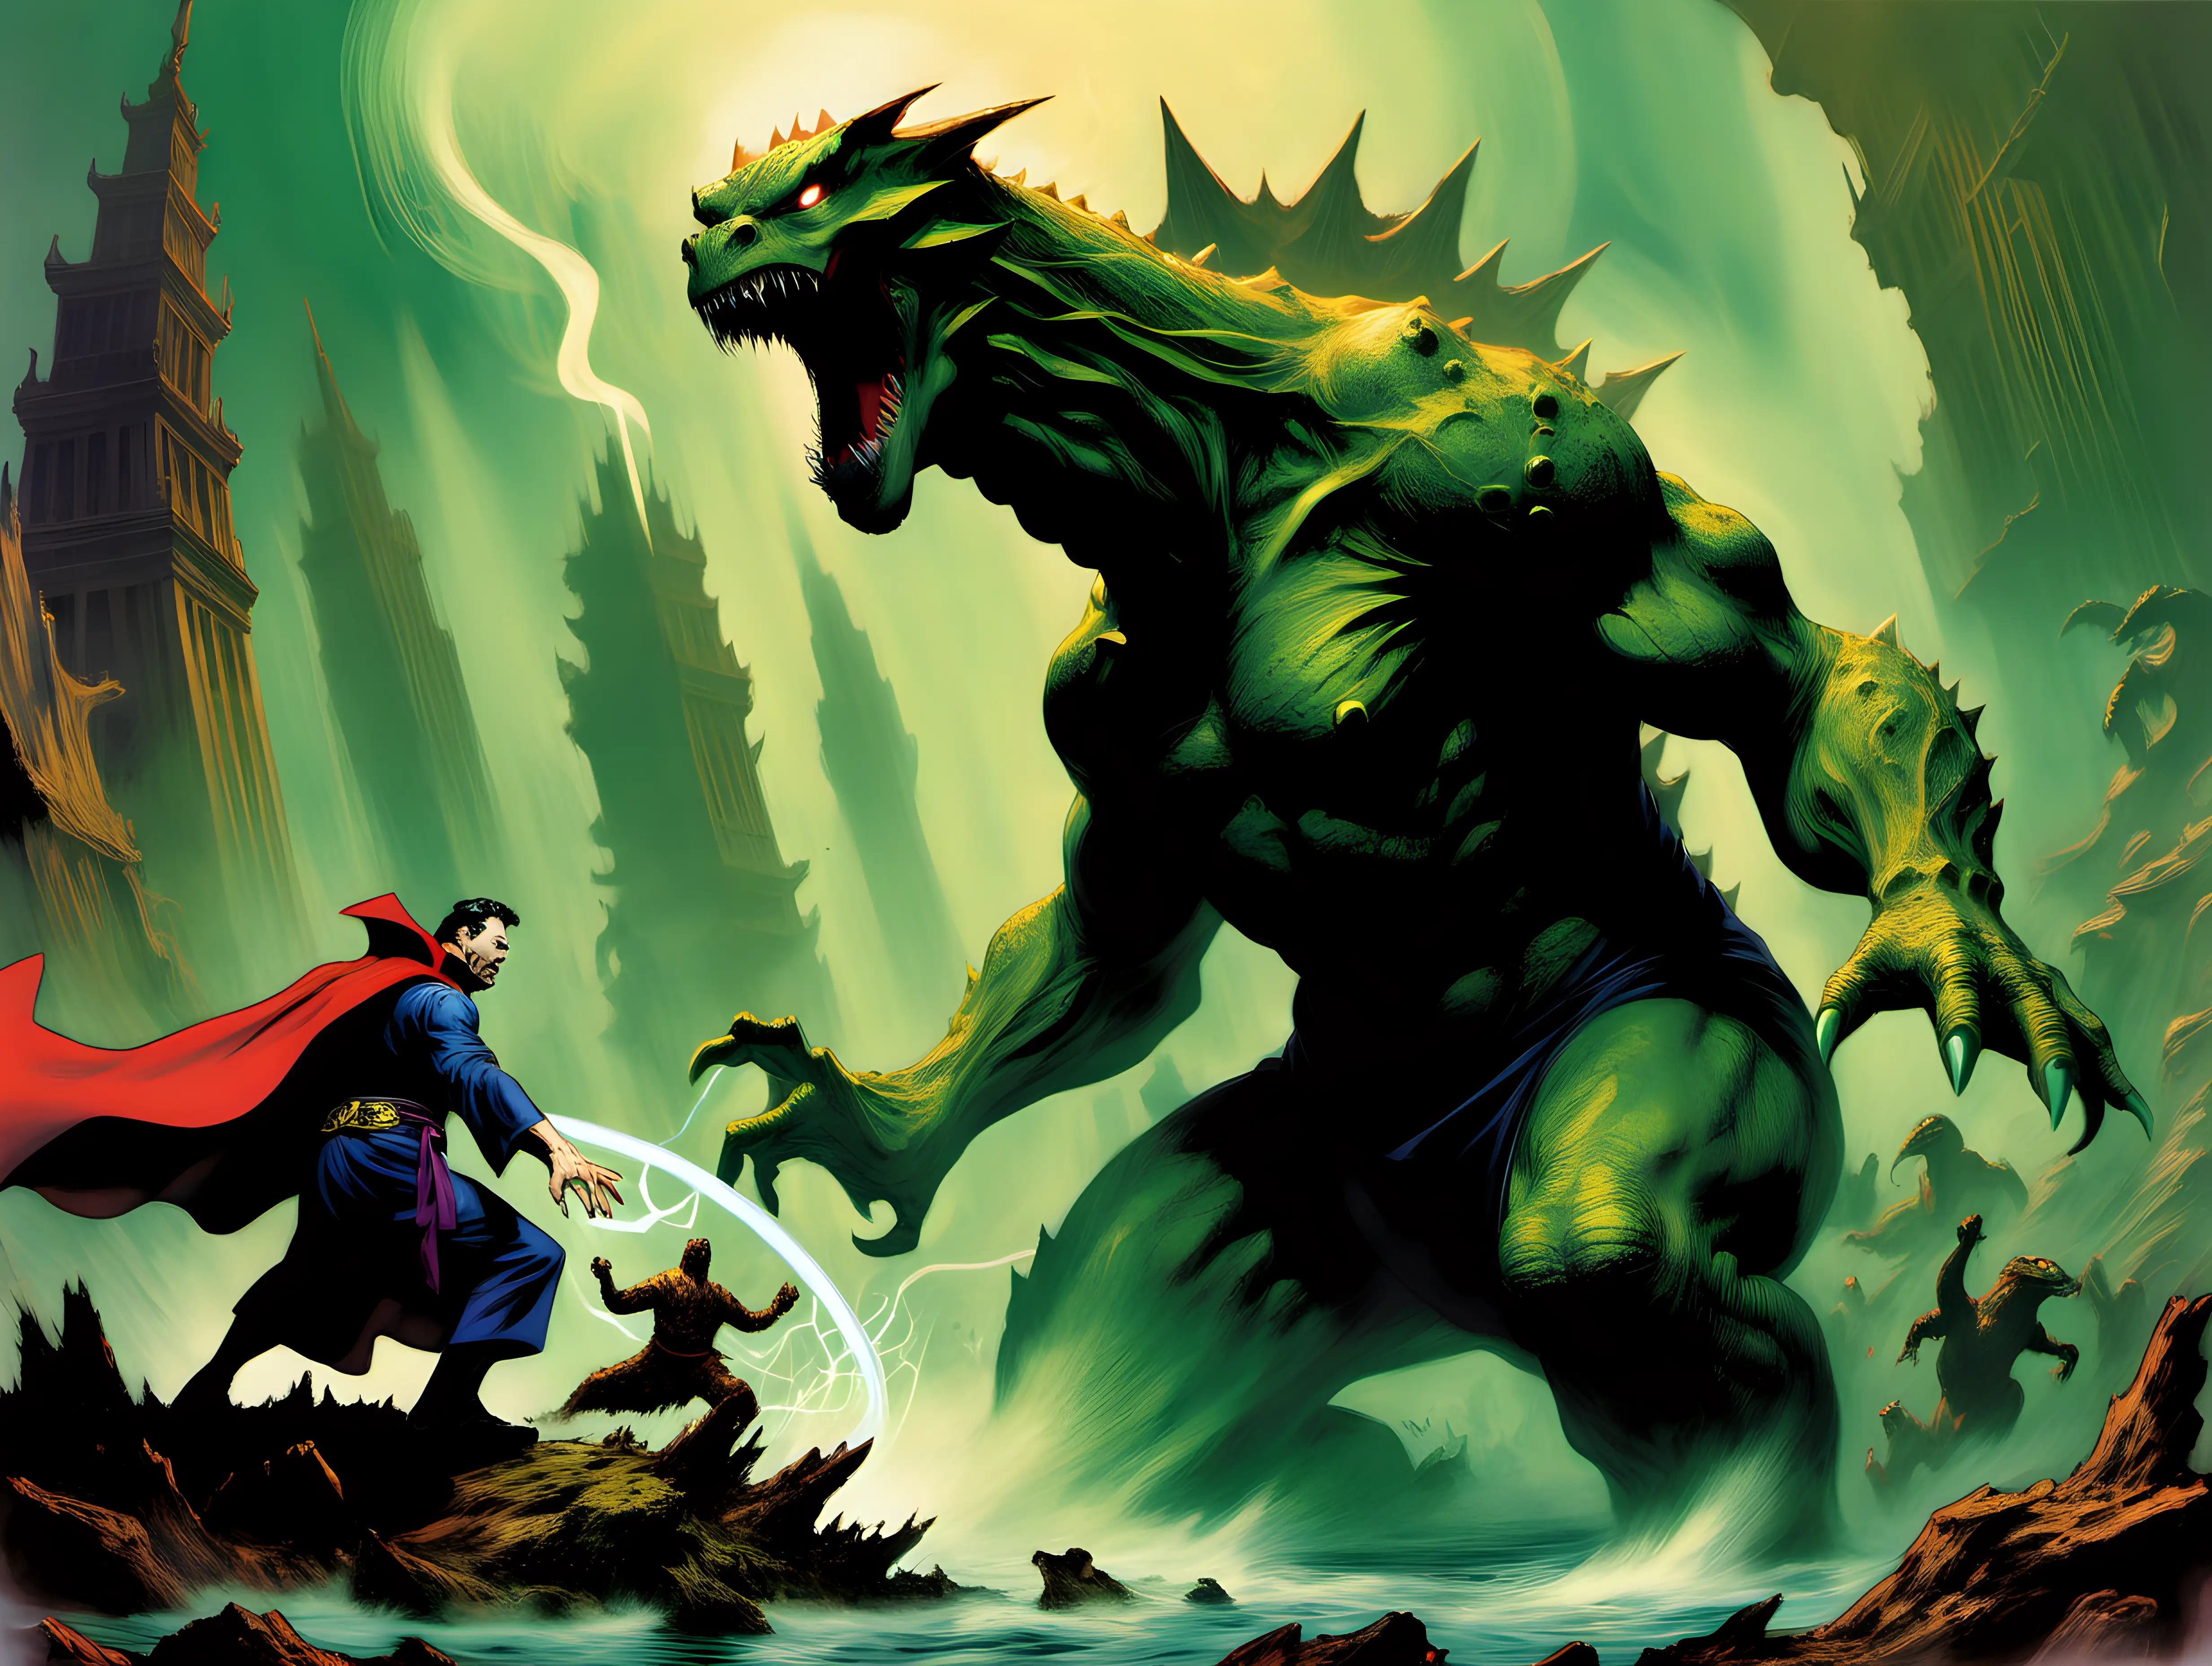 Doctor Strange fighting Godzilla in ancient swamp Frank Frazetta style